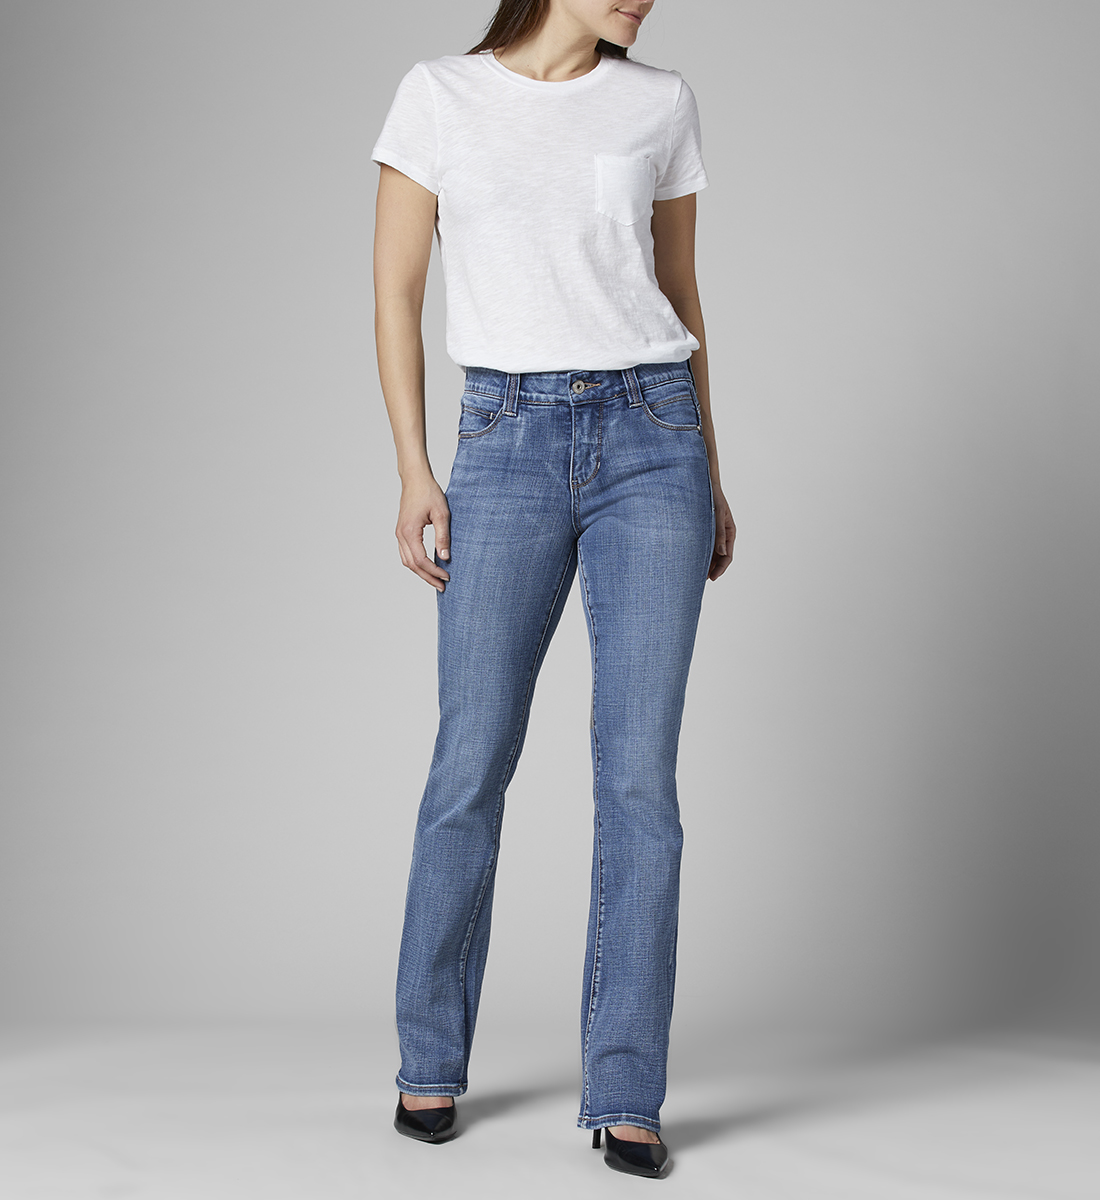 Eloise - Women's Petite Bootcut Jeans Medium Indigo | JAG® Jeans USA